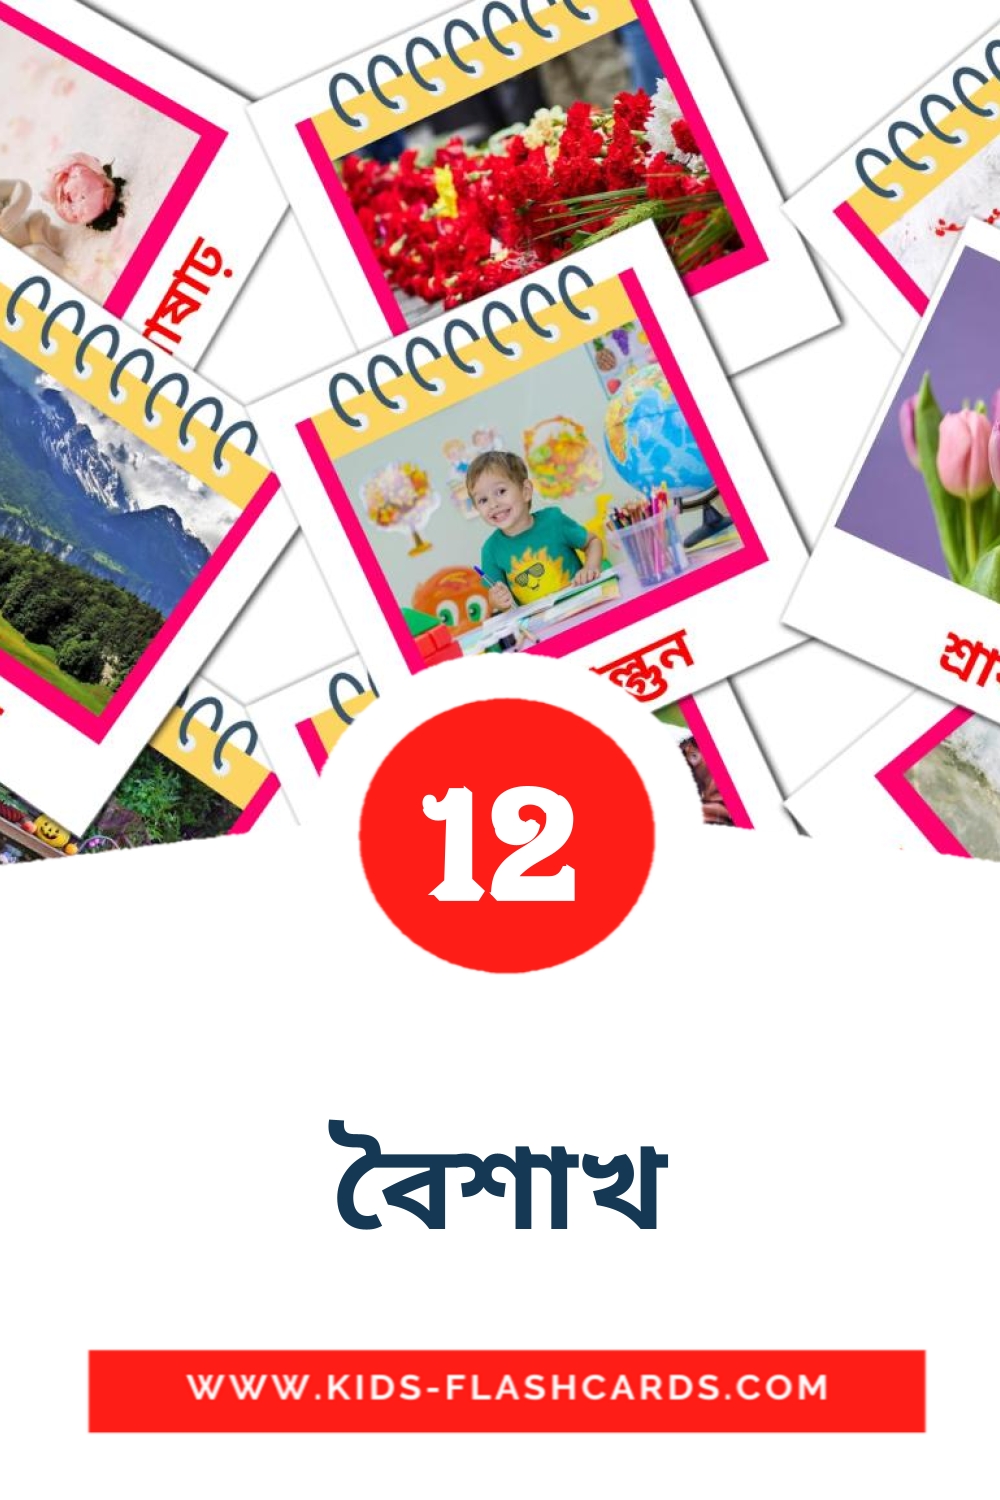 12 carte illustrate di বৈশাখ per la scuola materna in bengalese